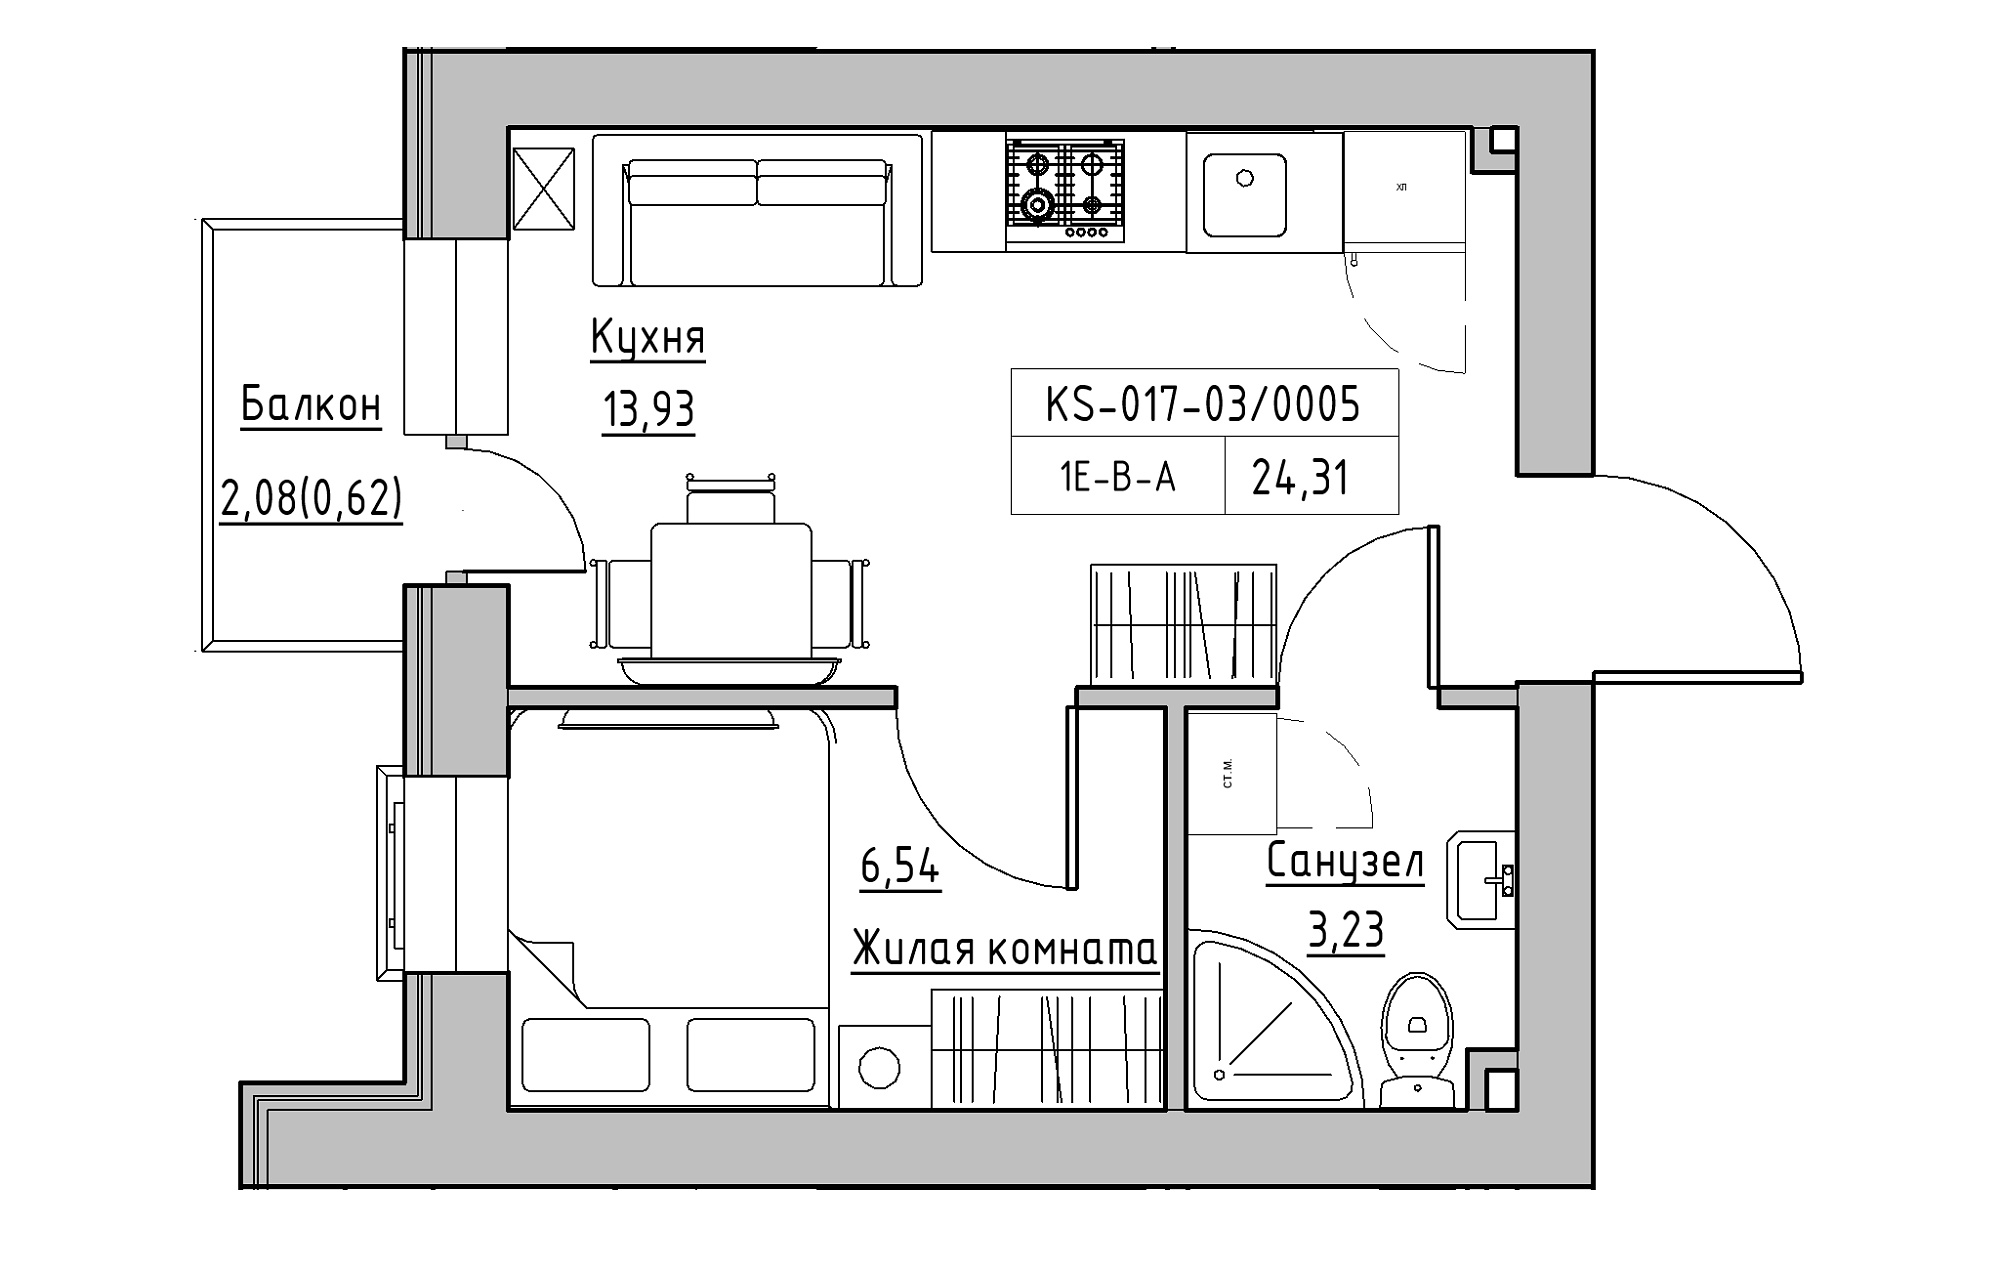 Planning 1-rm flats area 24.31m2, KS-017-03/0005.